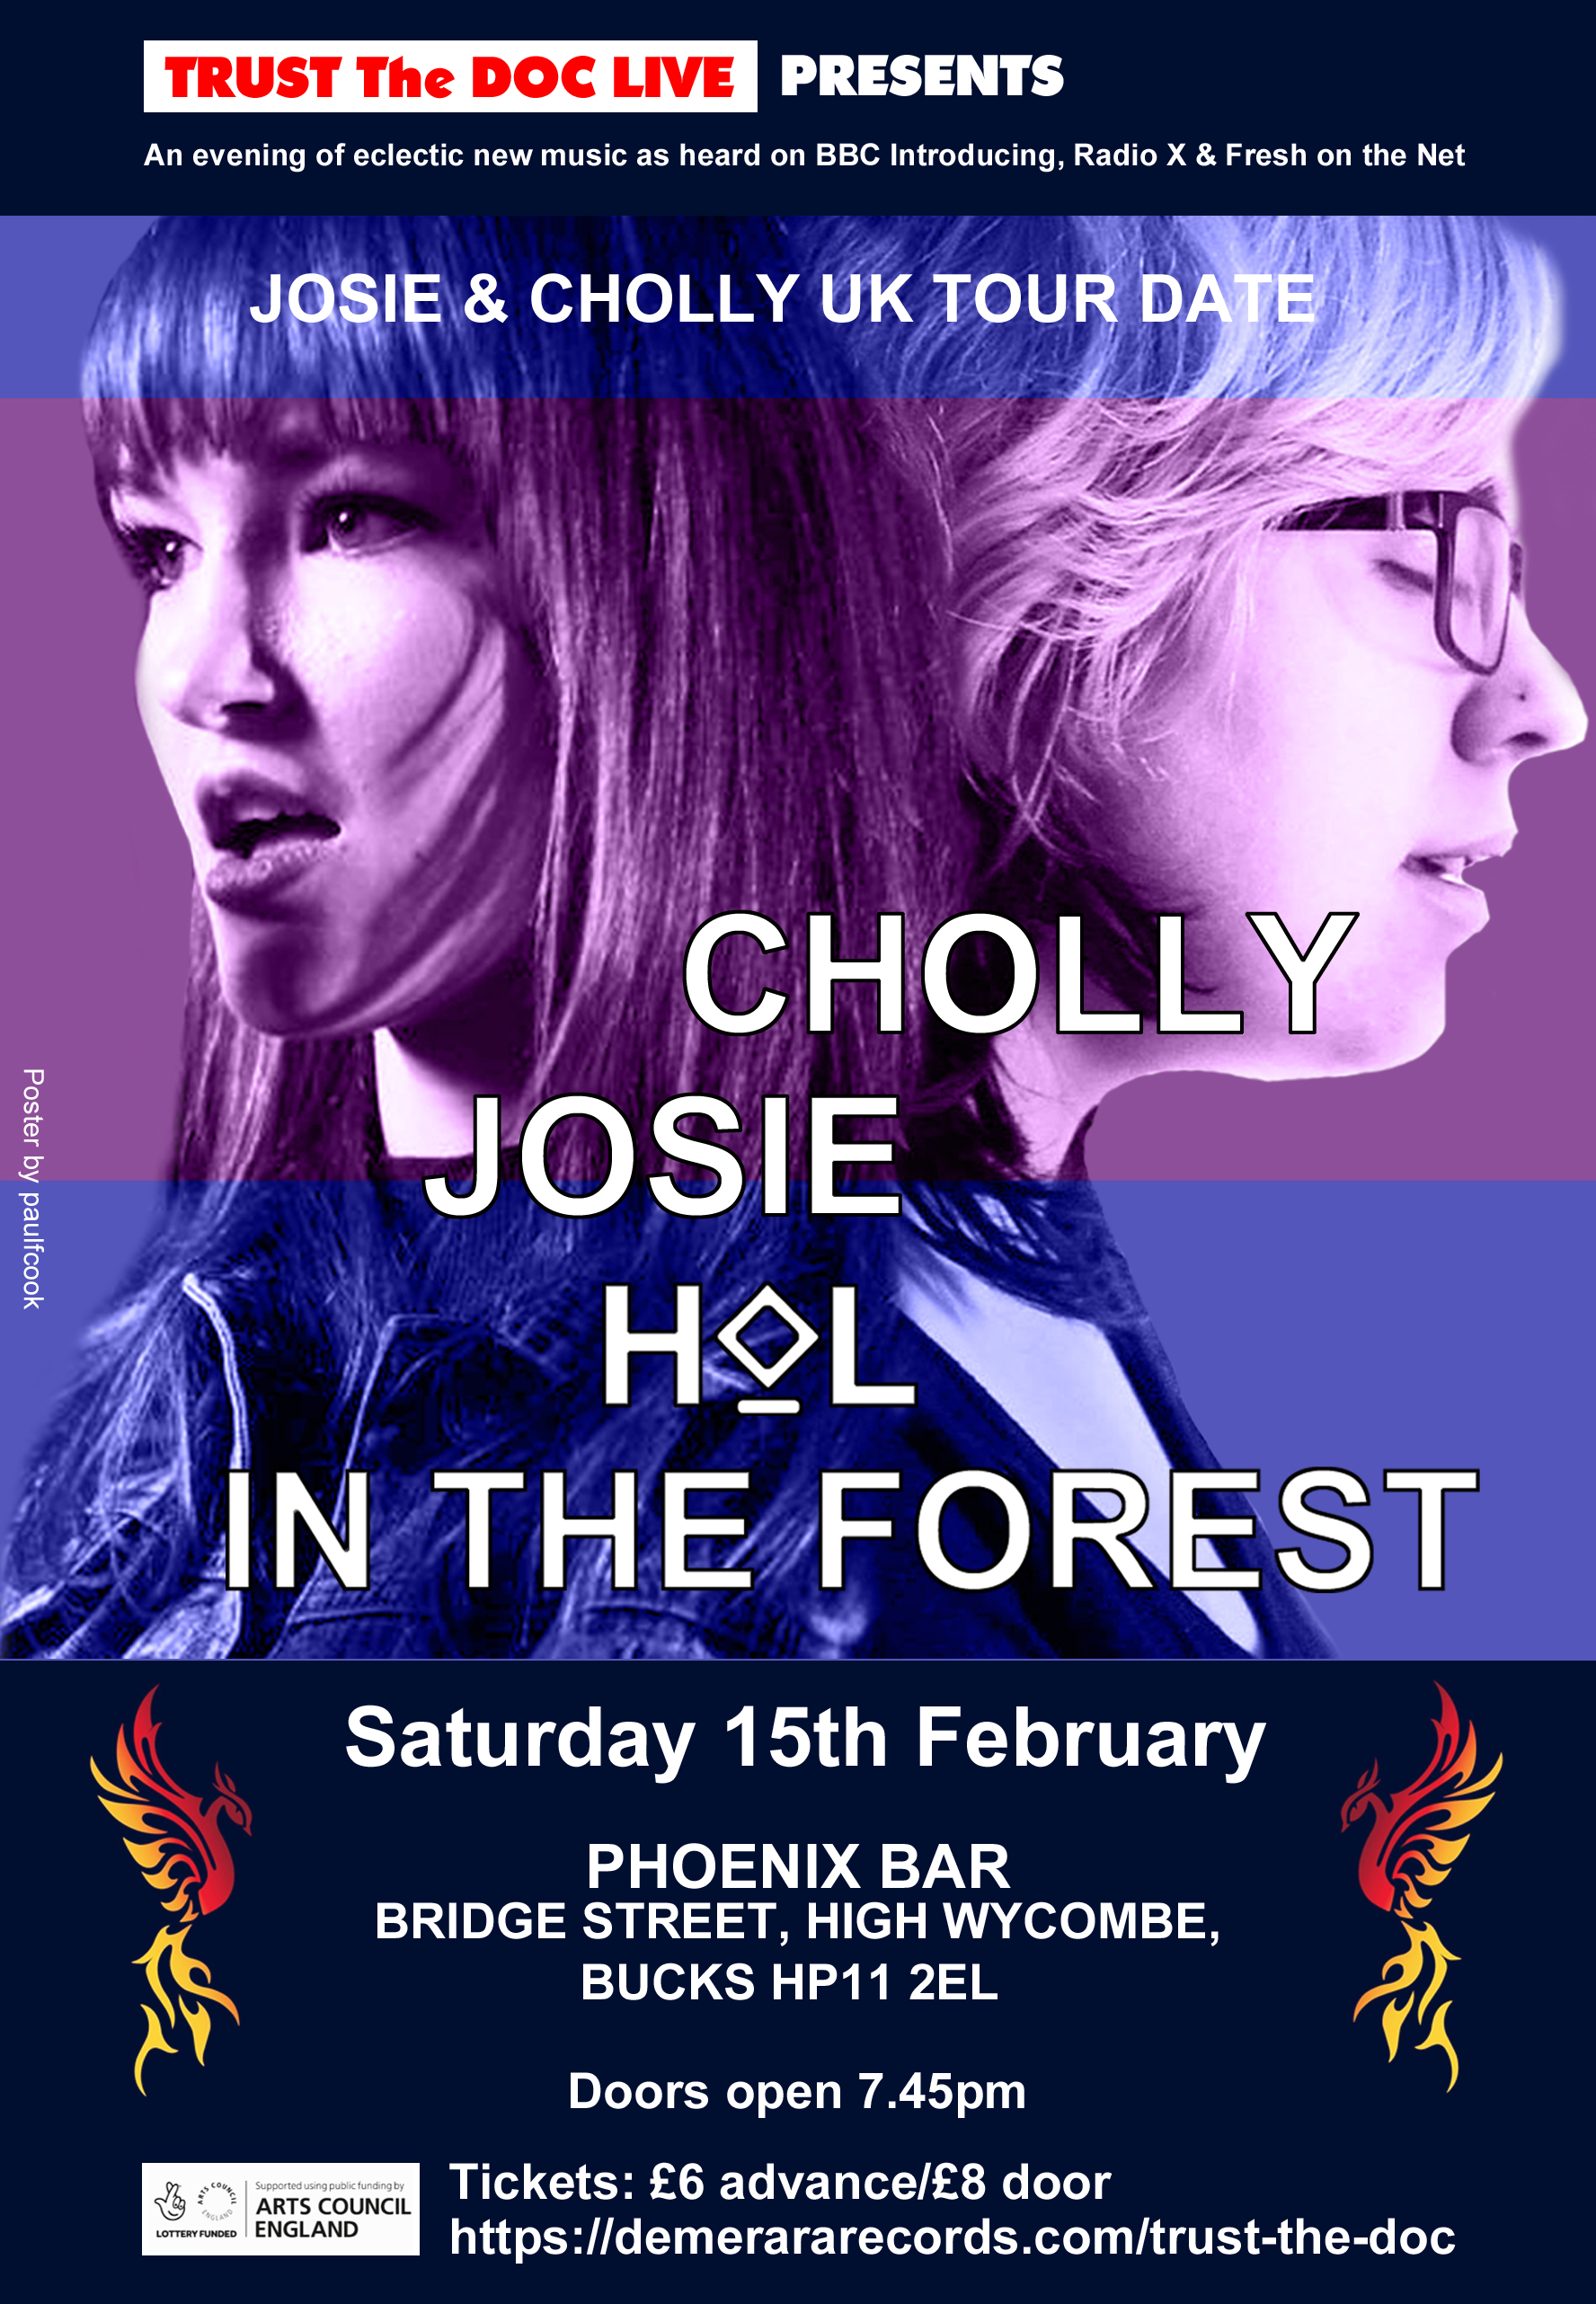 Josie-Cholly-Phoenix Bar-High Wycombe-15.02